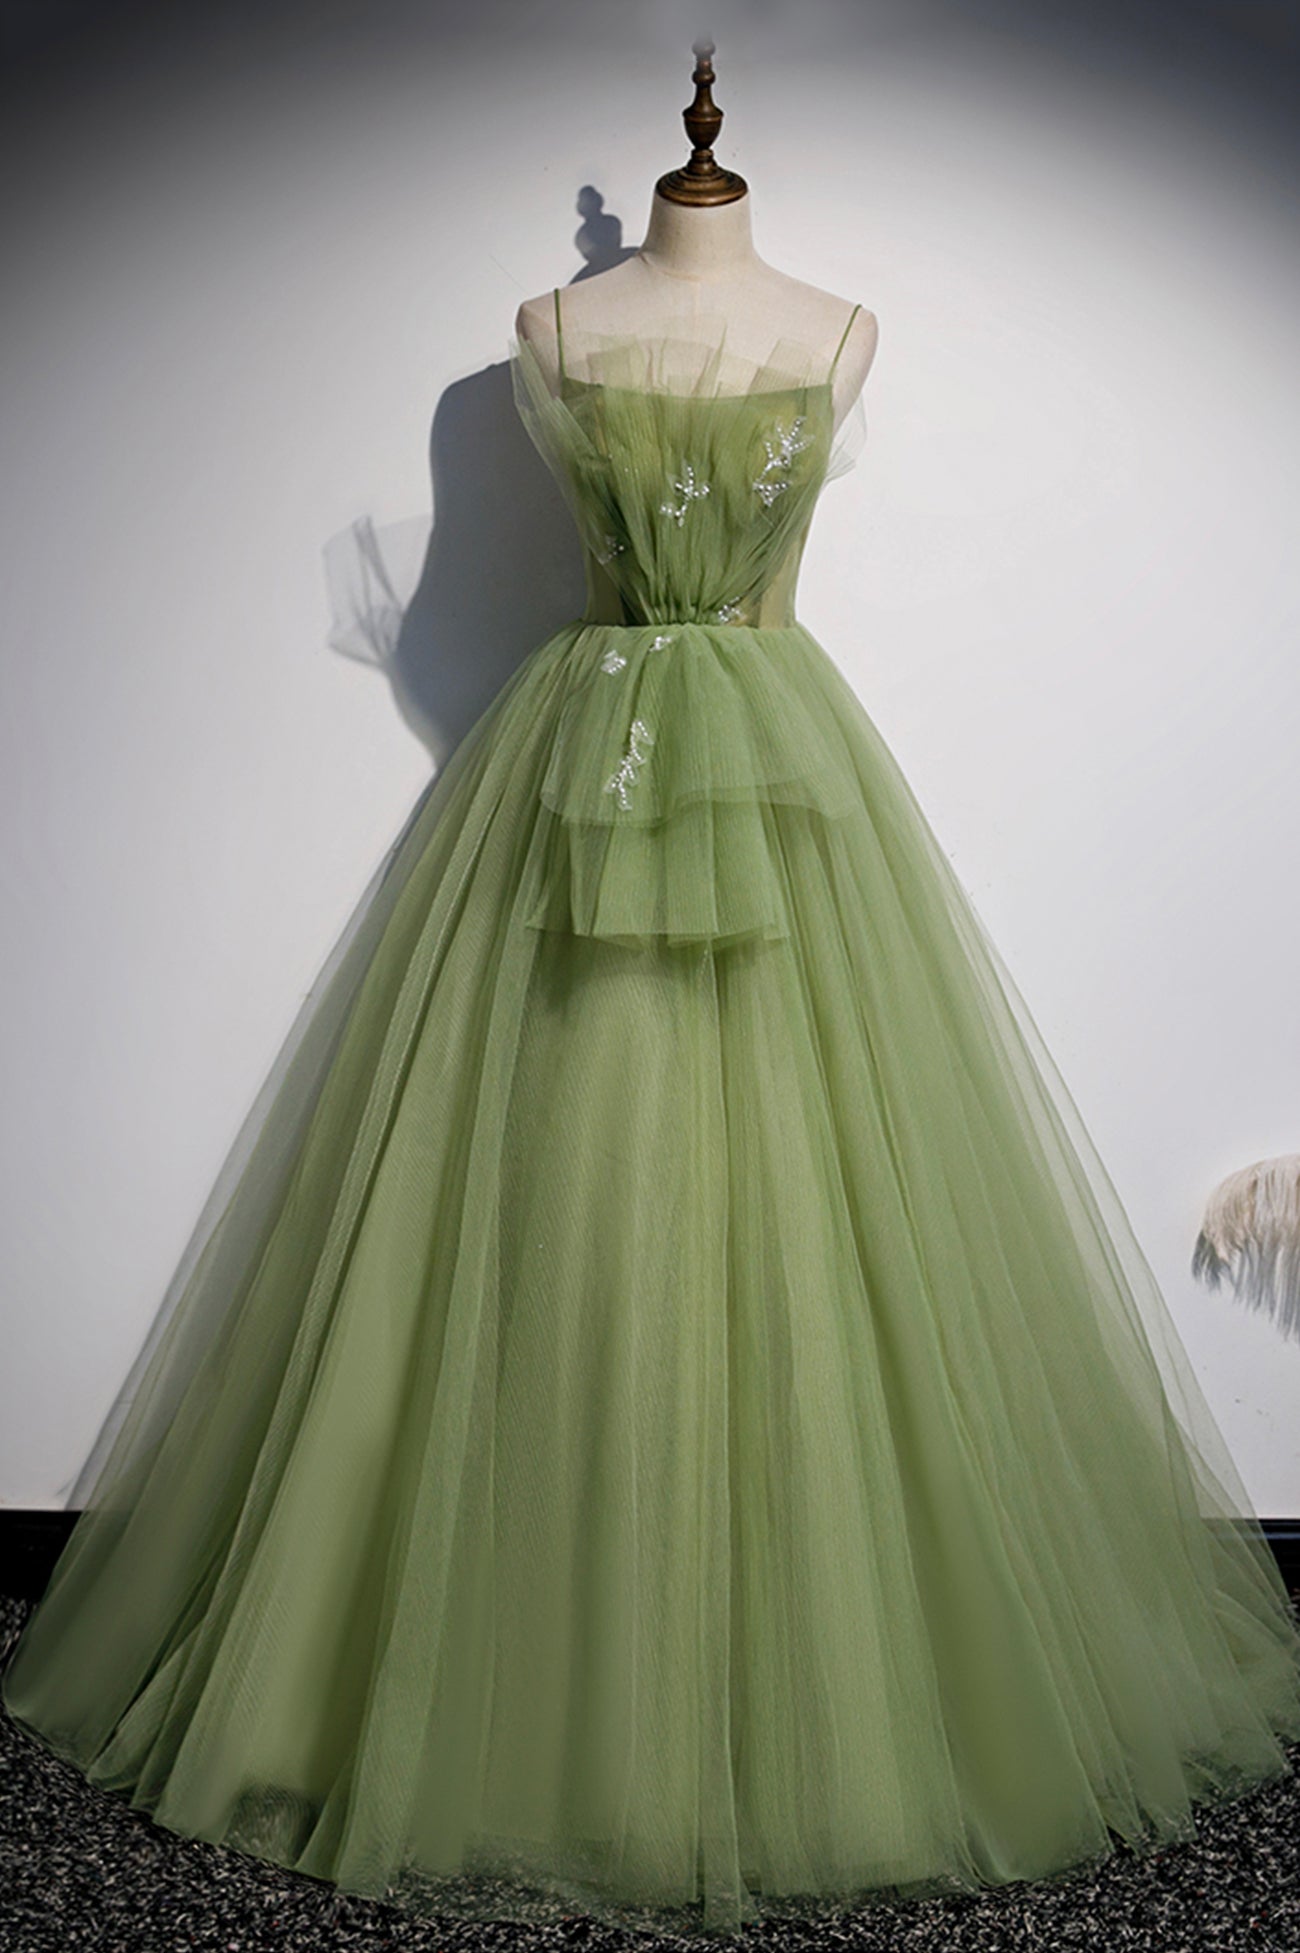 Green Scoop Tulle Floor Length Prom Dress, A-Line Green Formal Dress